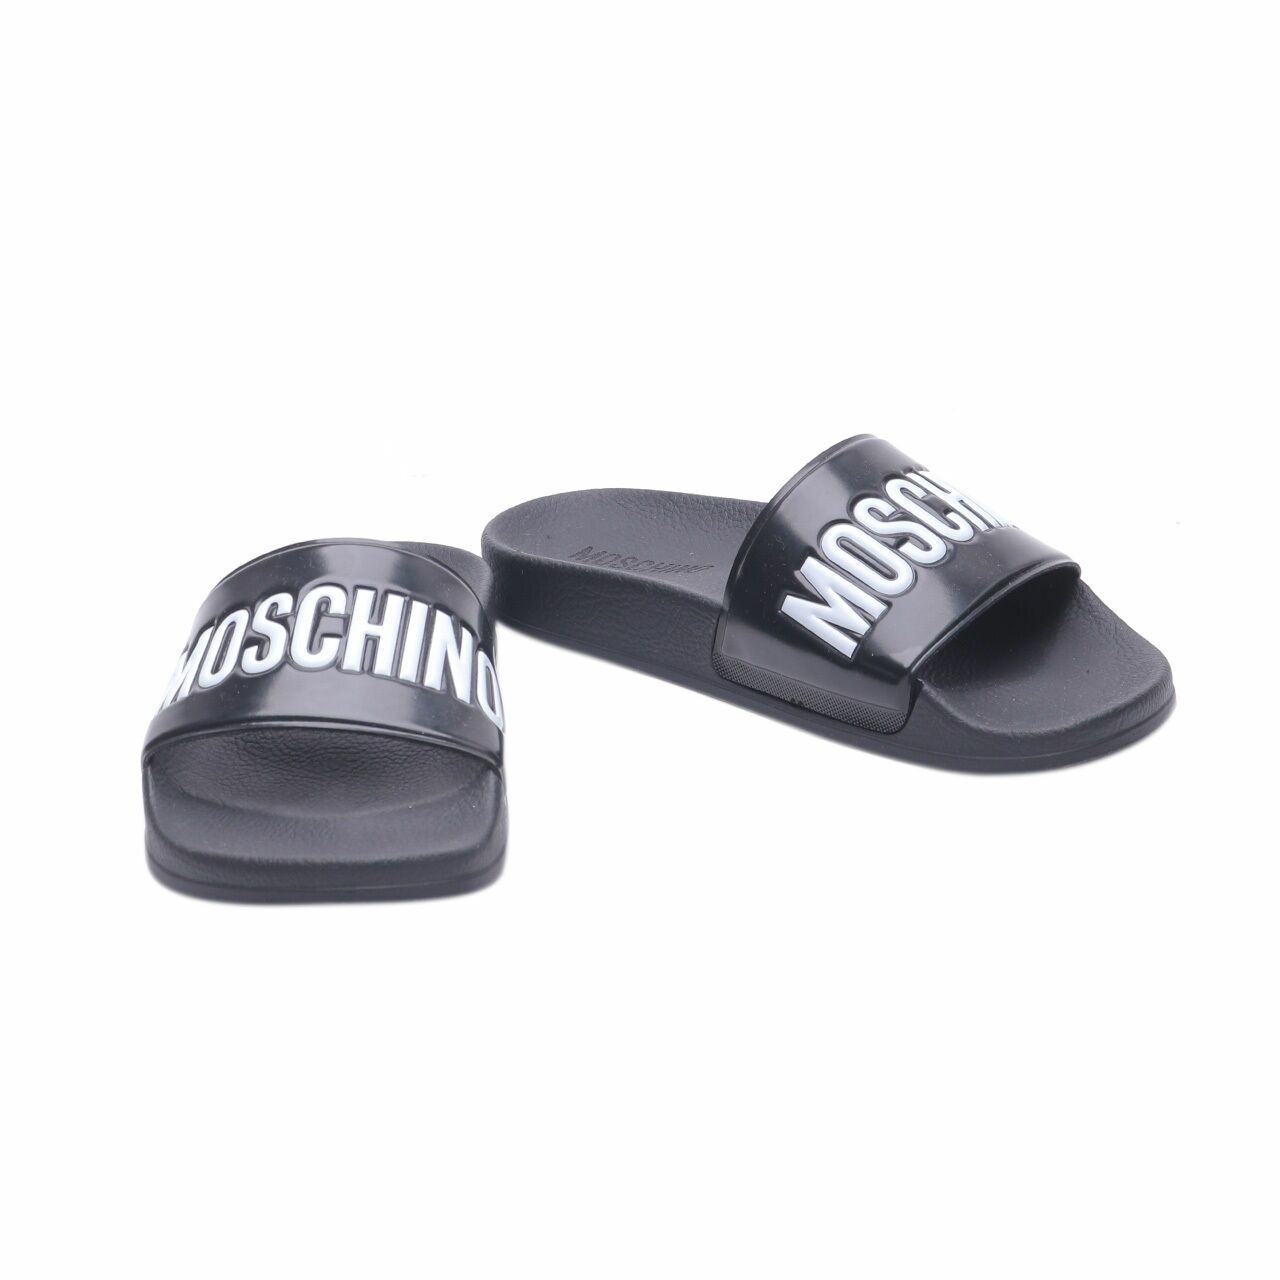 Moschino Pvc With Logo Black Slides Sandals